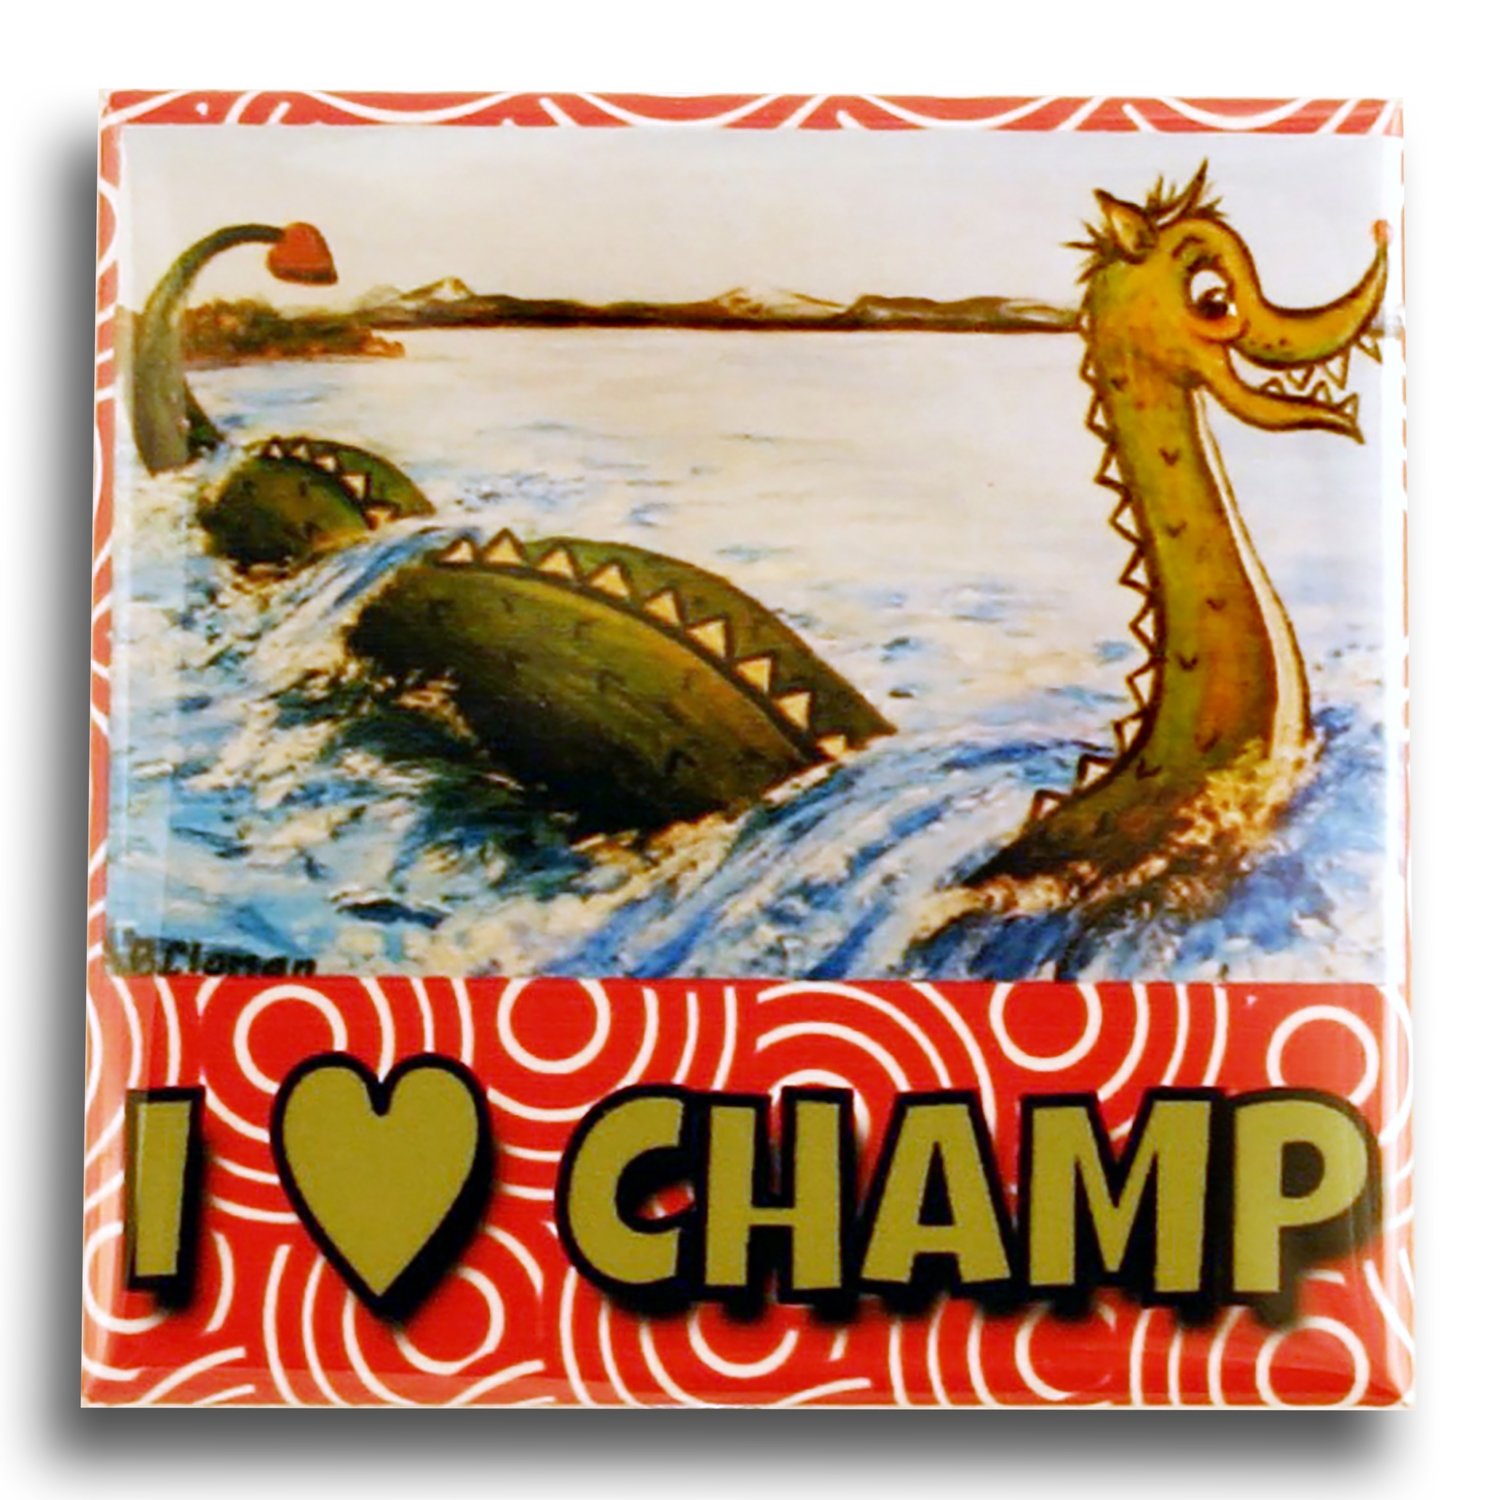 Clonan Champ – I Heart Champ 2” Square Magnet